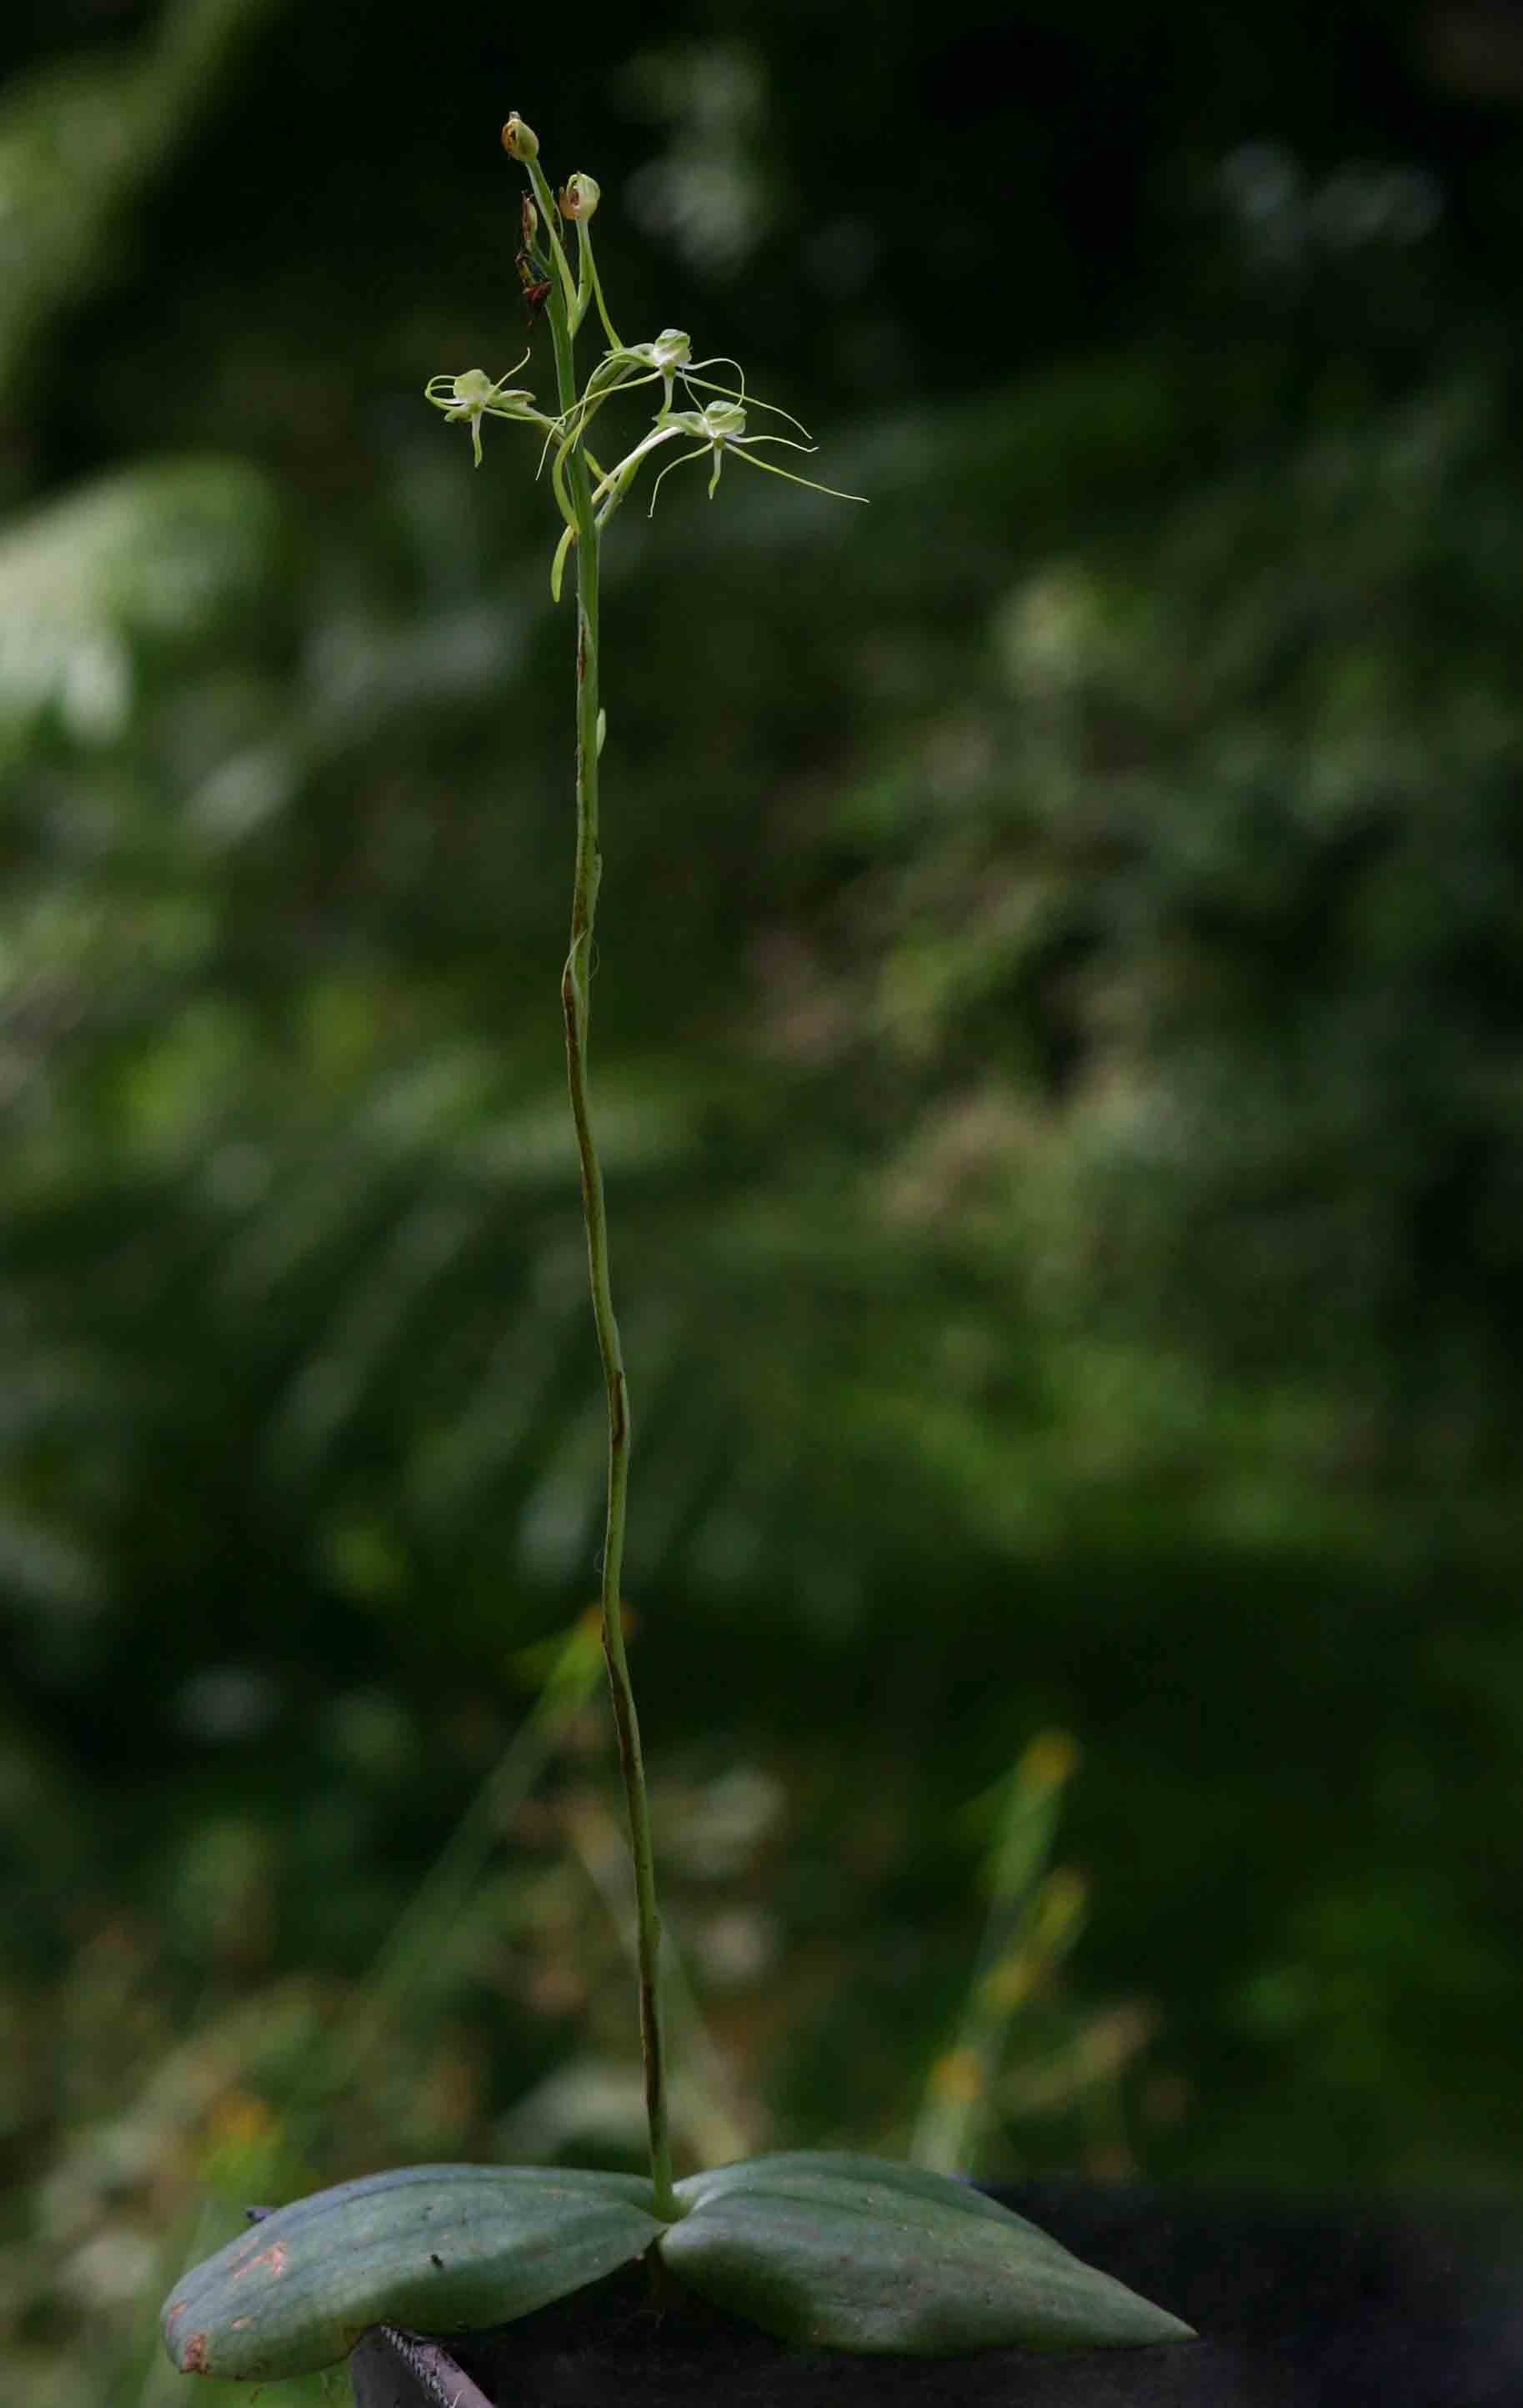 Habenaria trilobulata